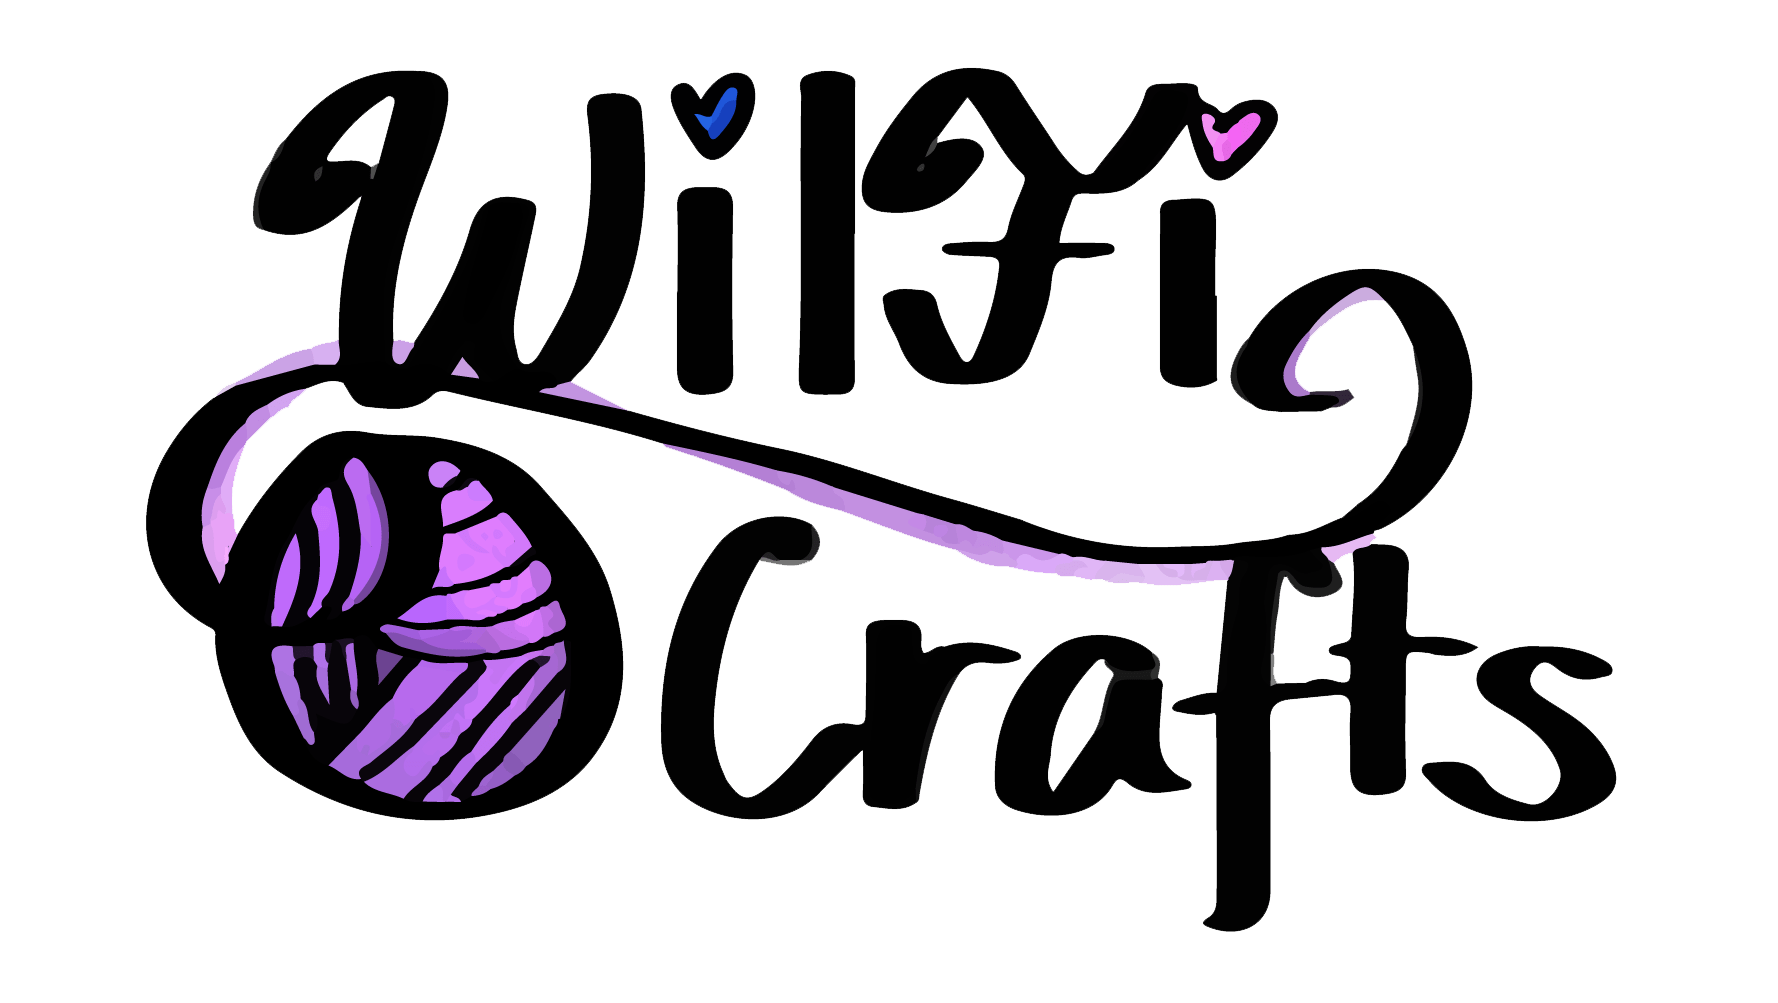 Crafts crafter